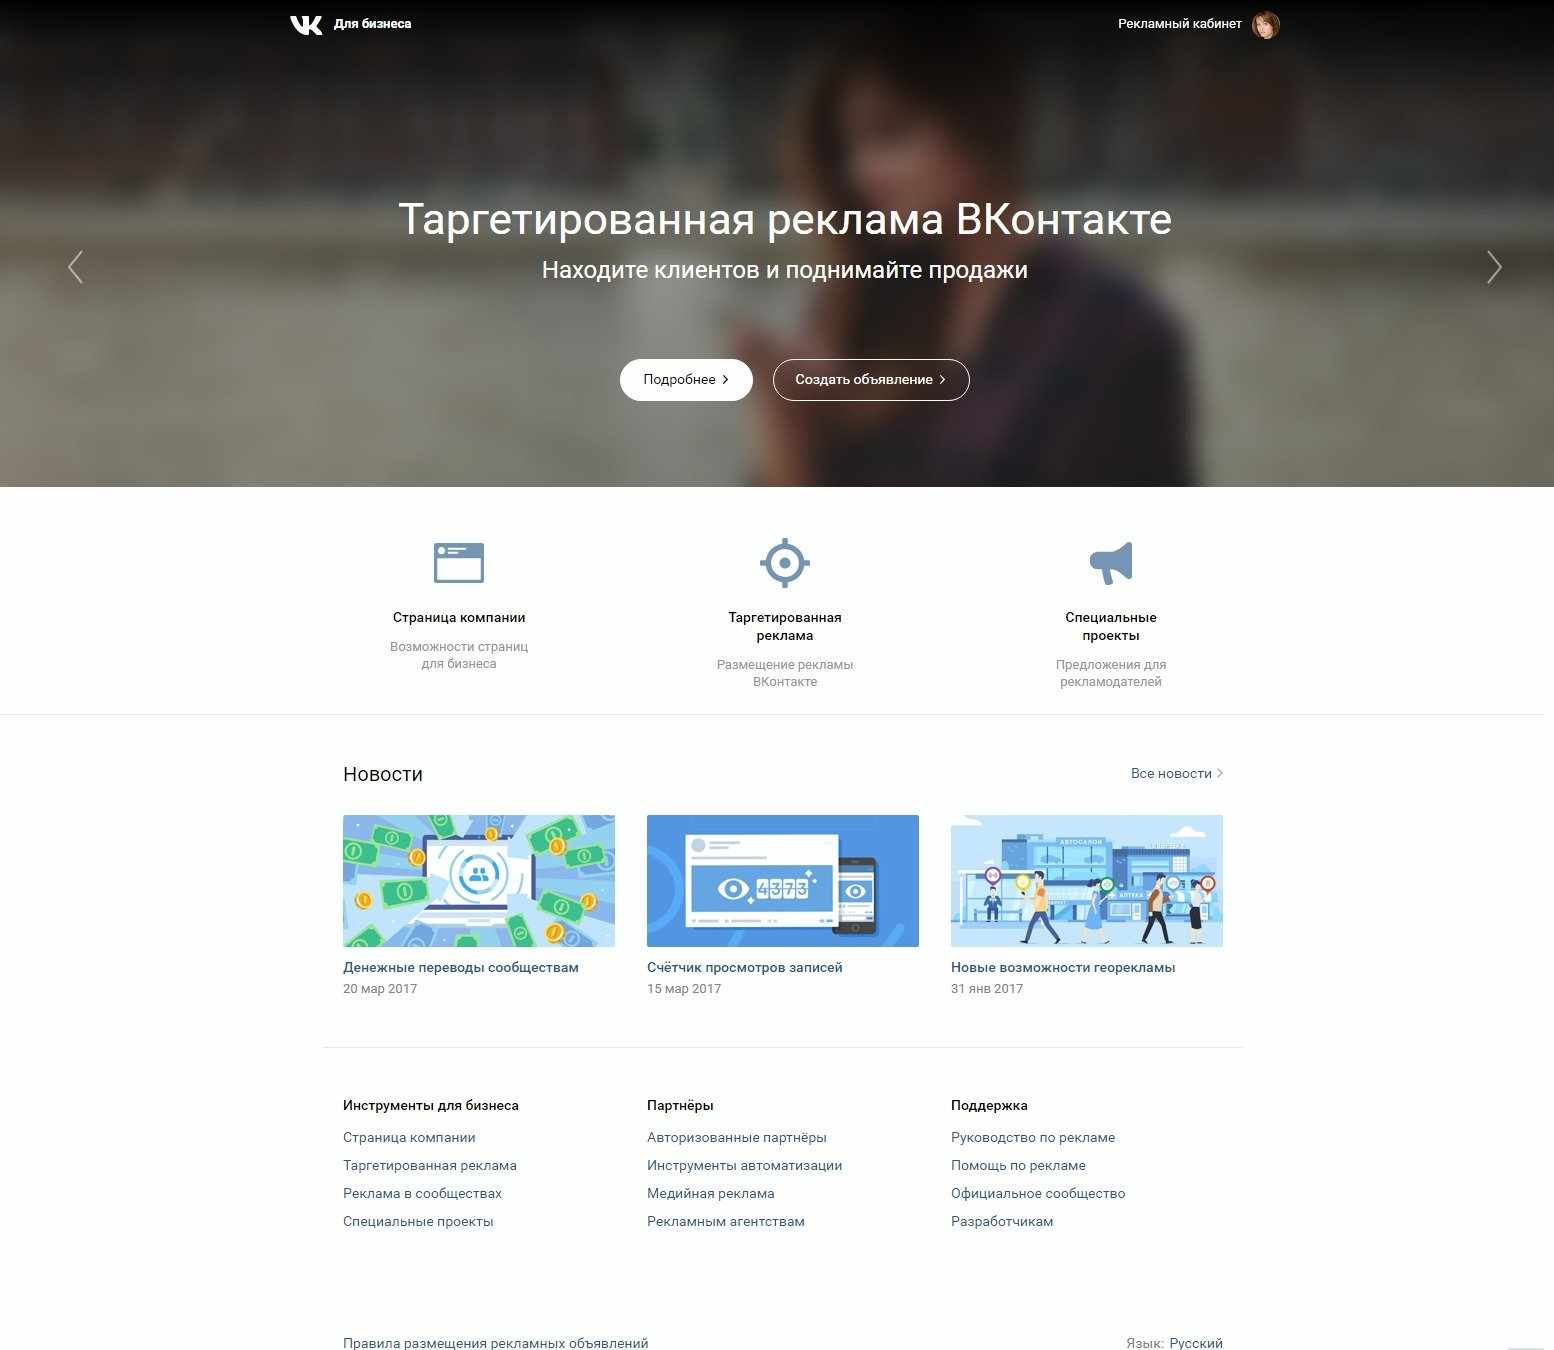 targetirovannaya-reklama-vkontakte